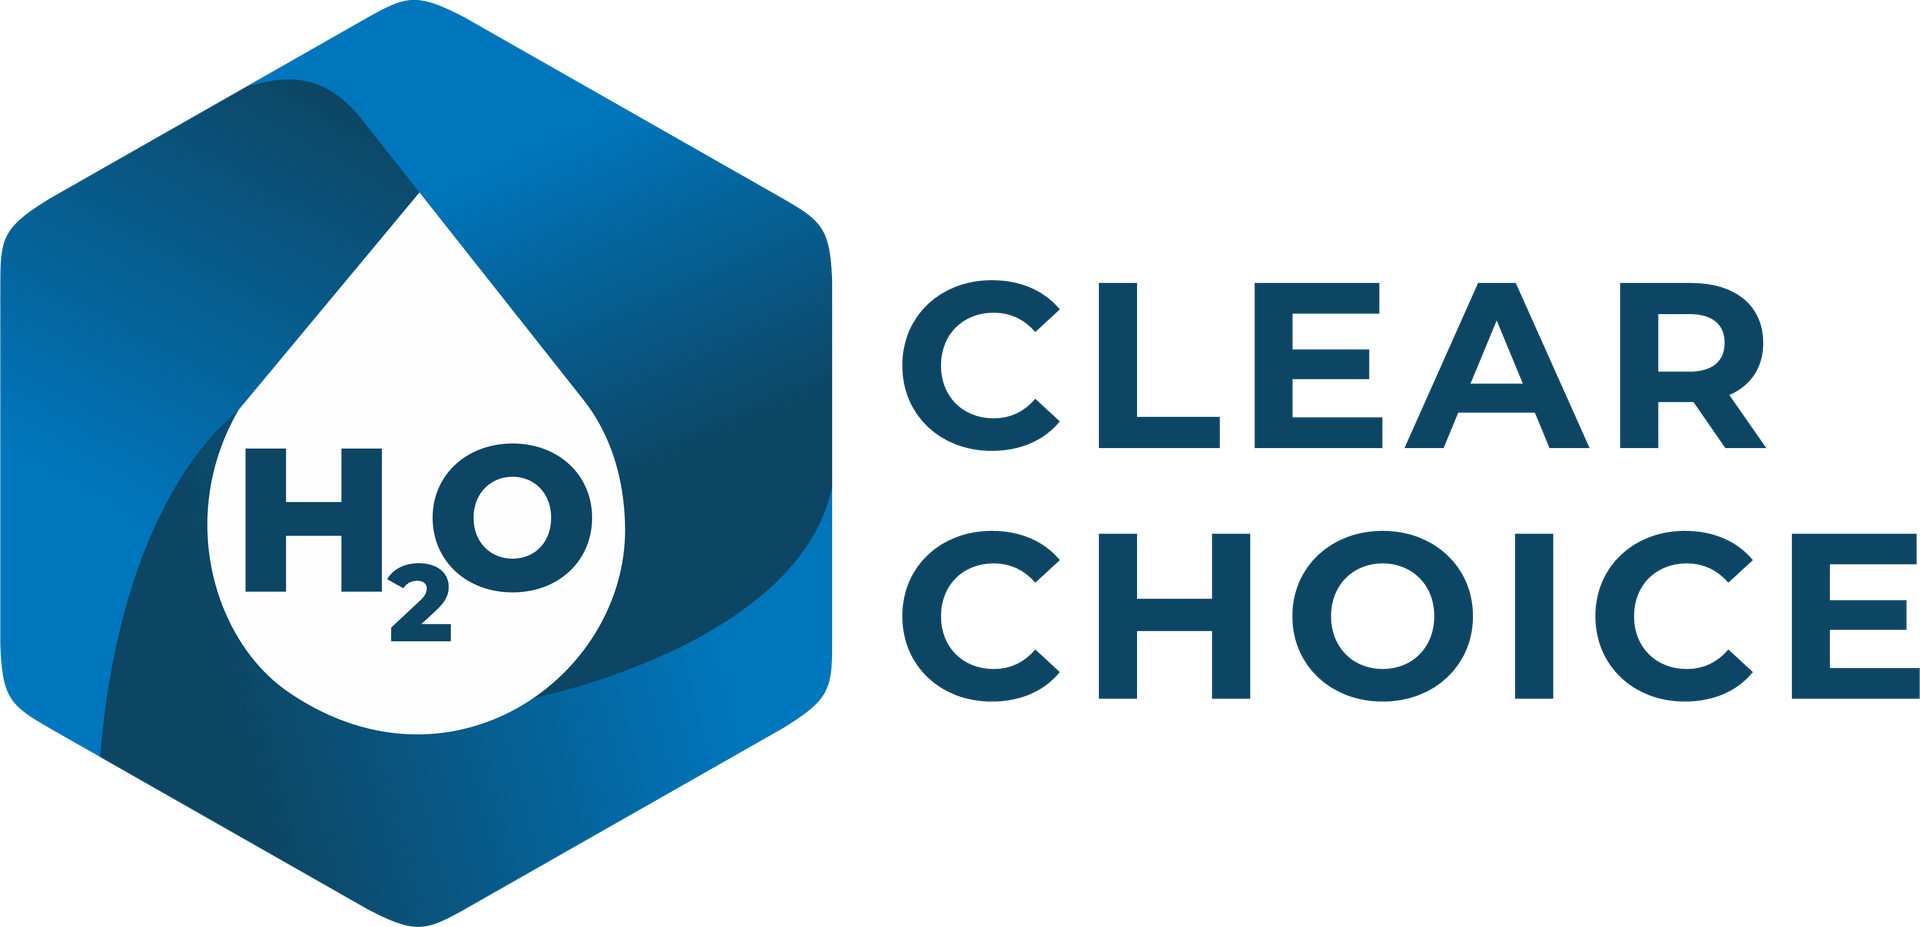 Clear Choice H2O